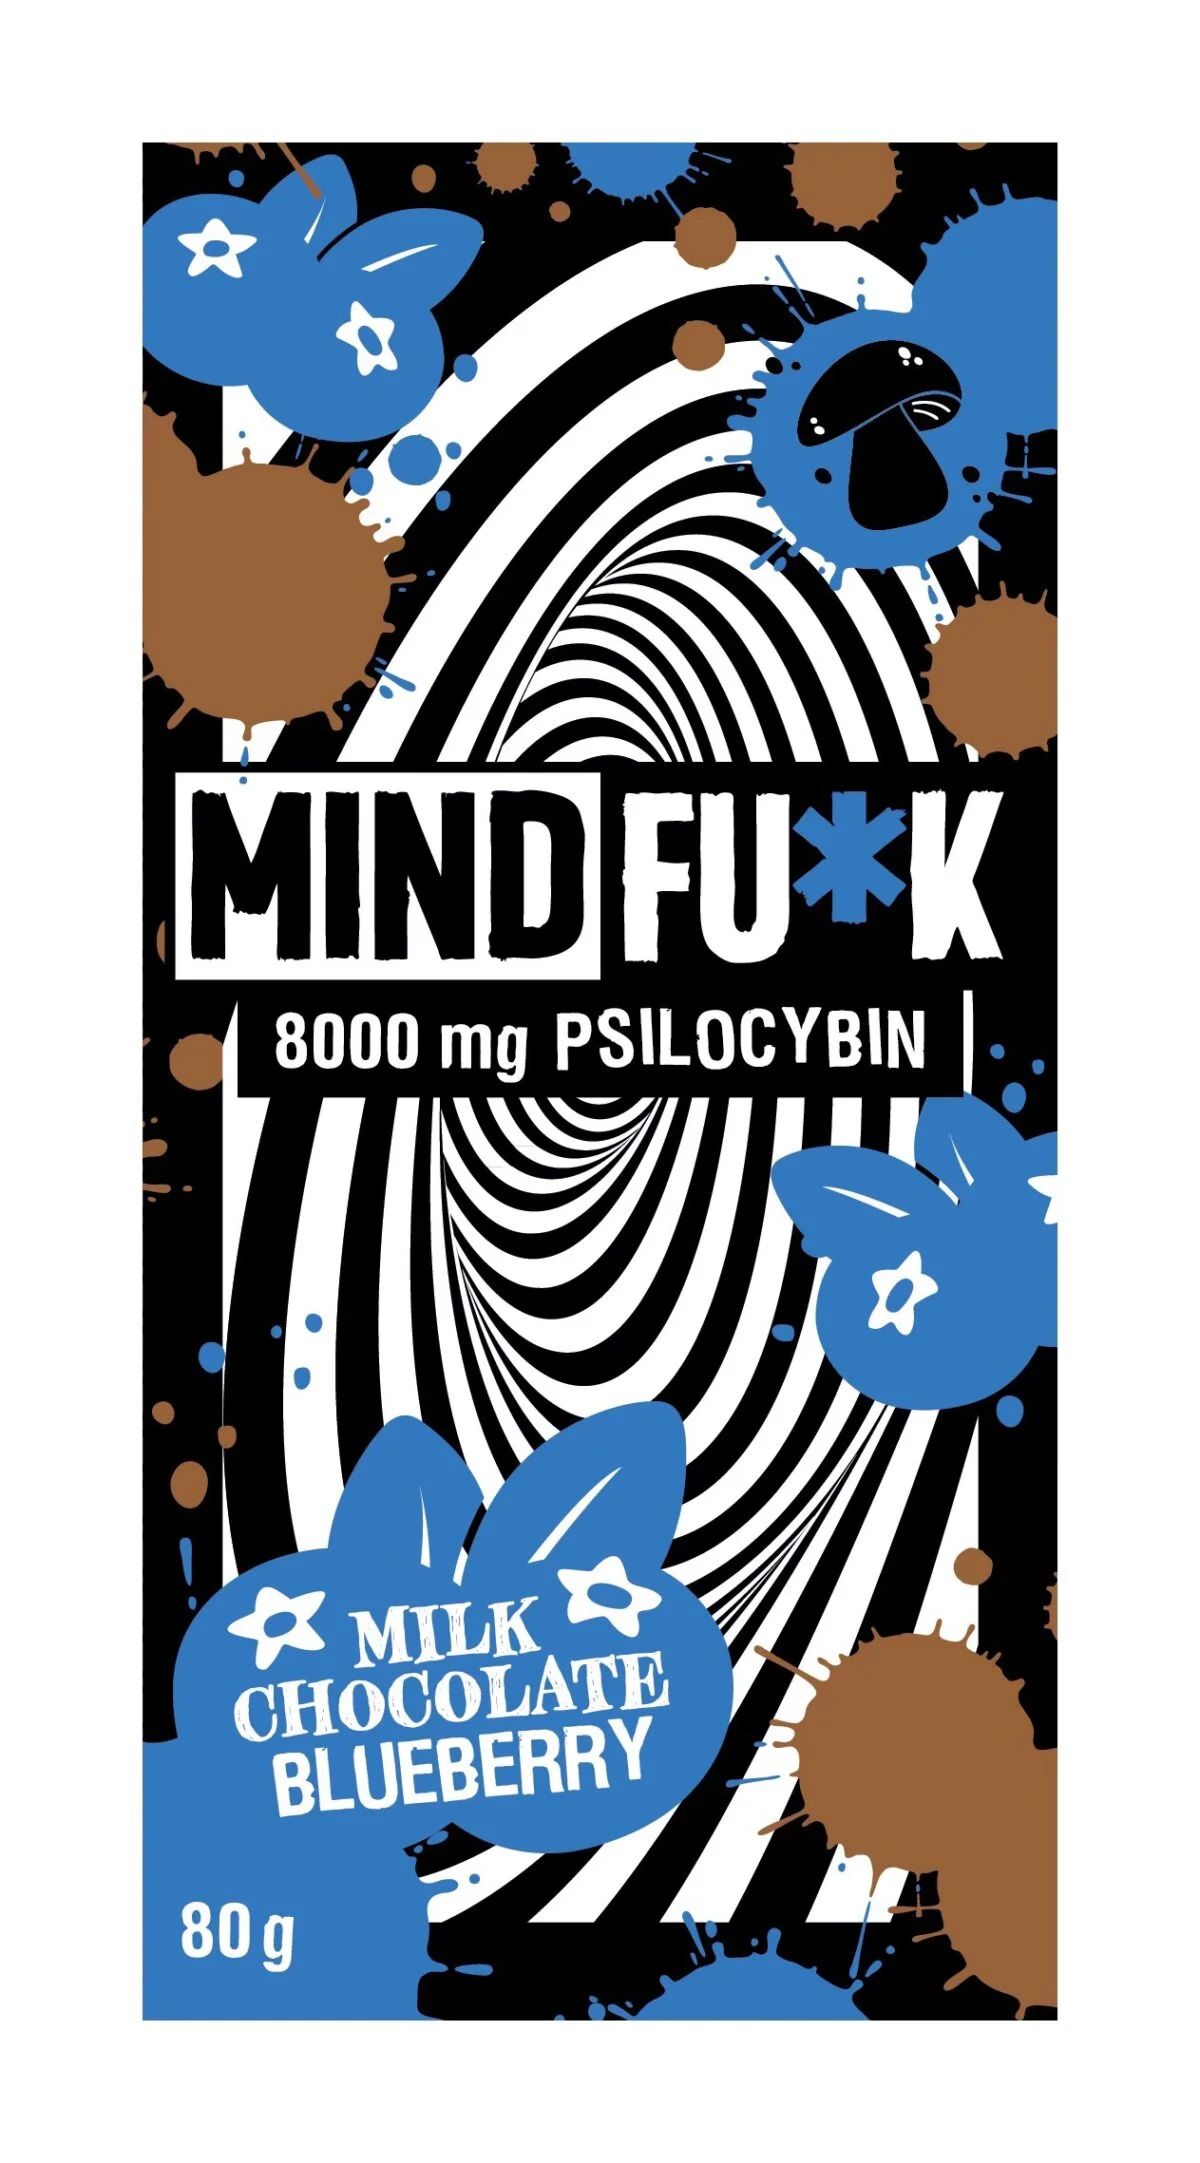 MIND FU*K Psilocybin Chocolate Bar